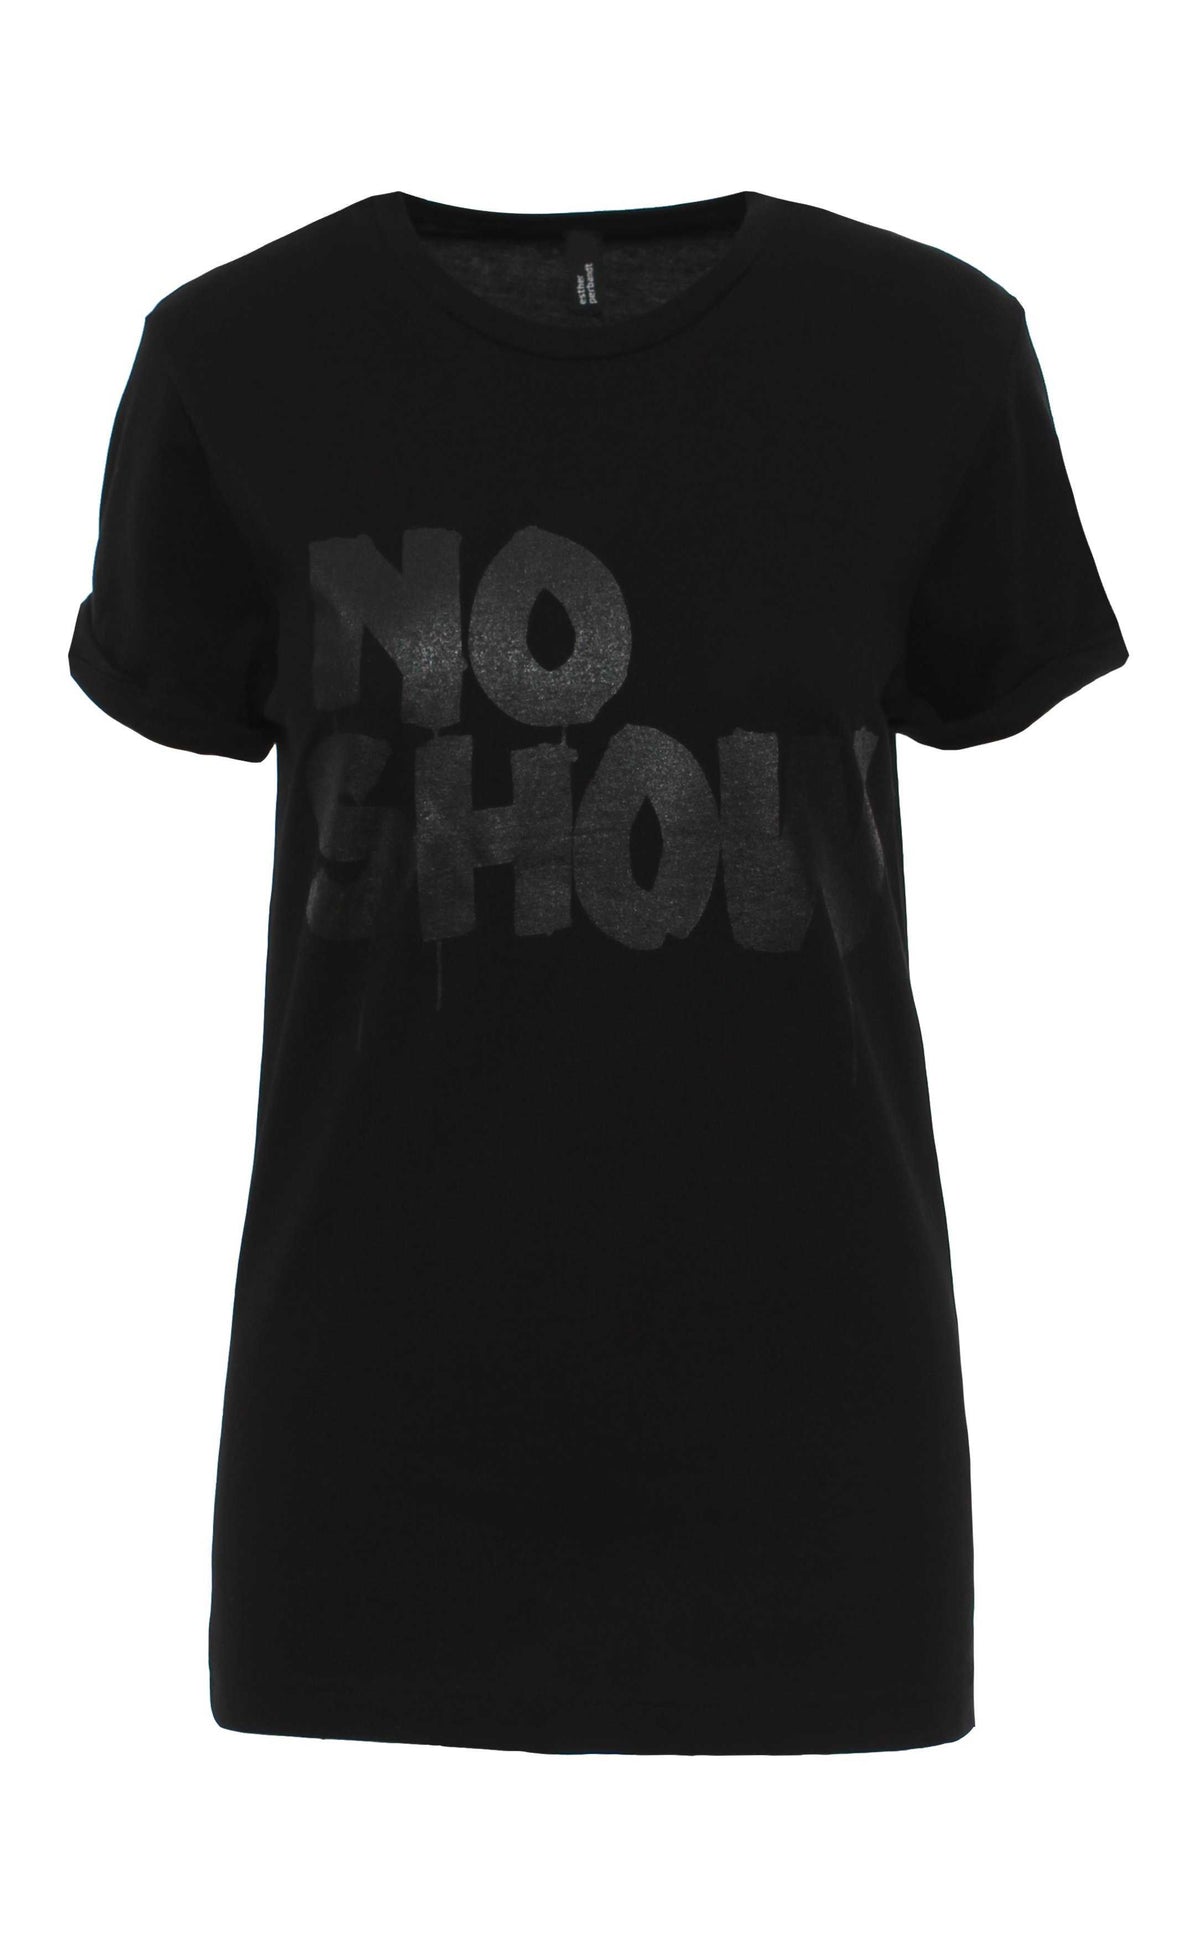 NO SHOW - Statement T-shirt | esther perbandt